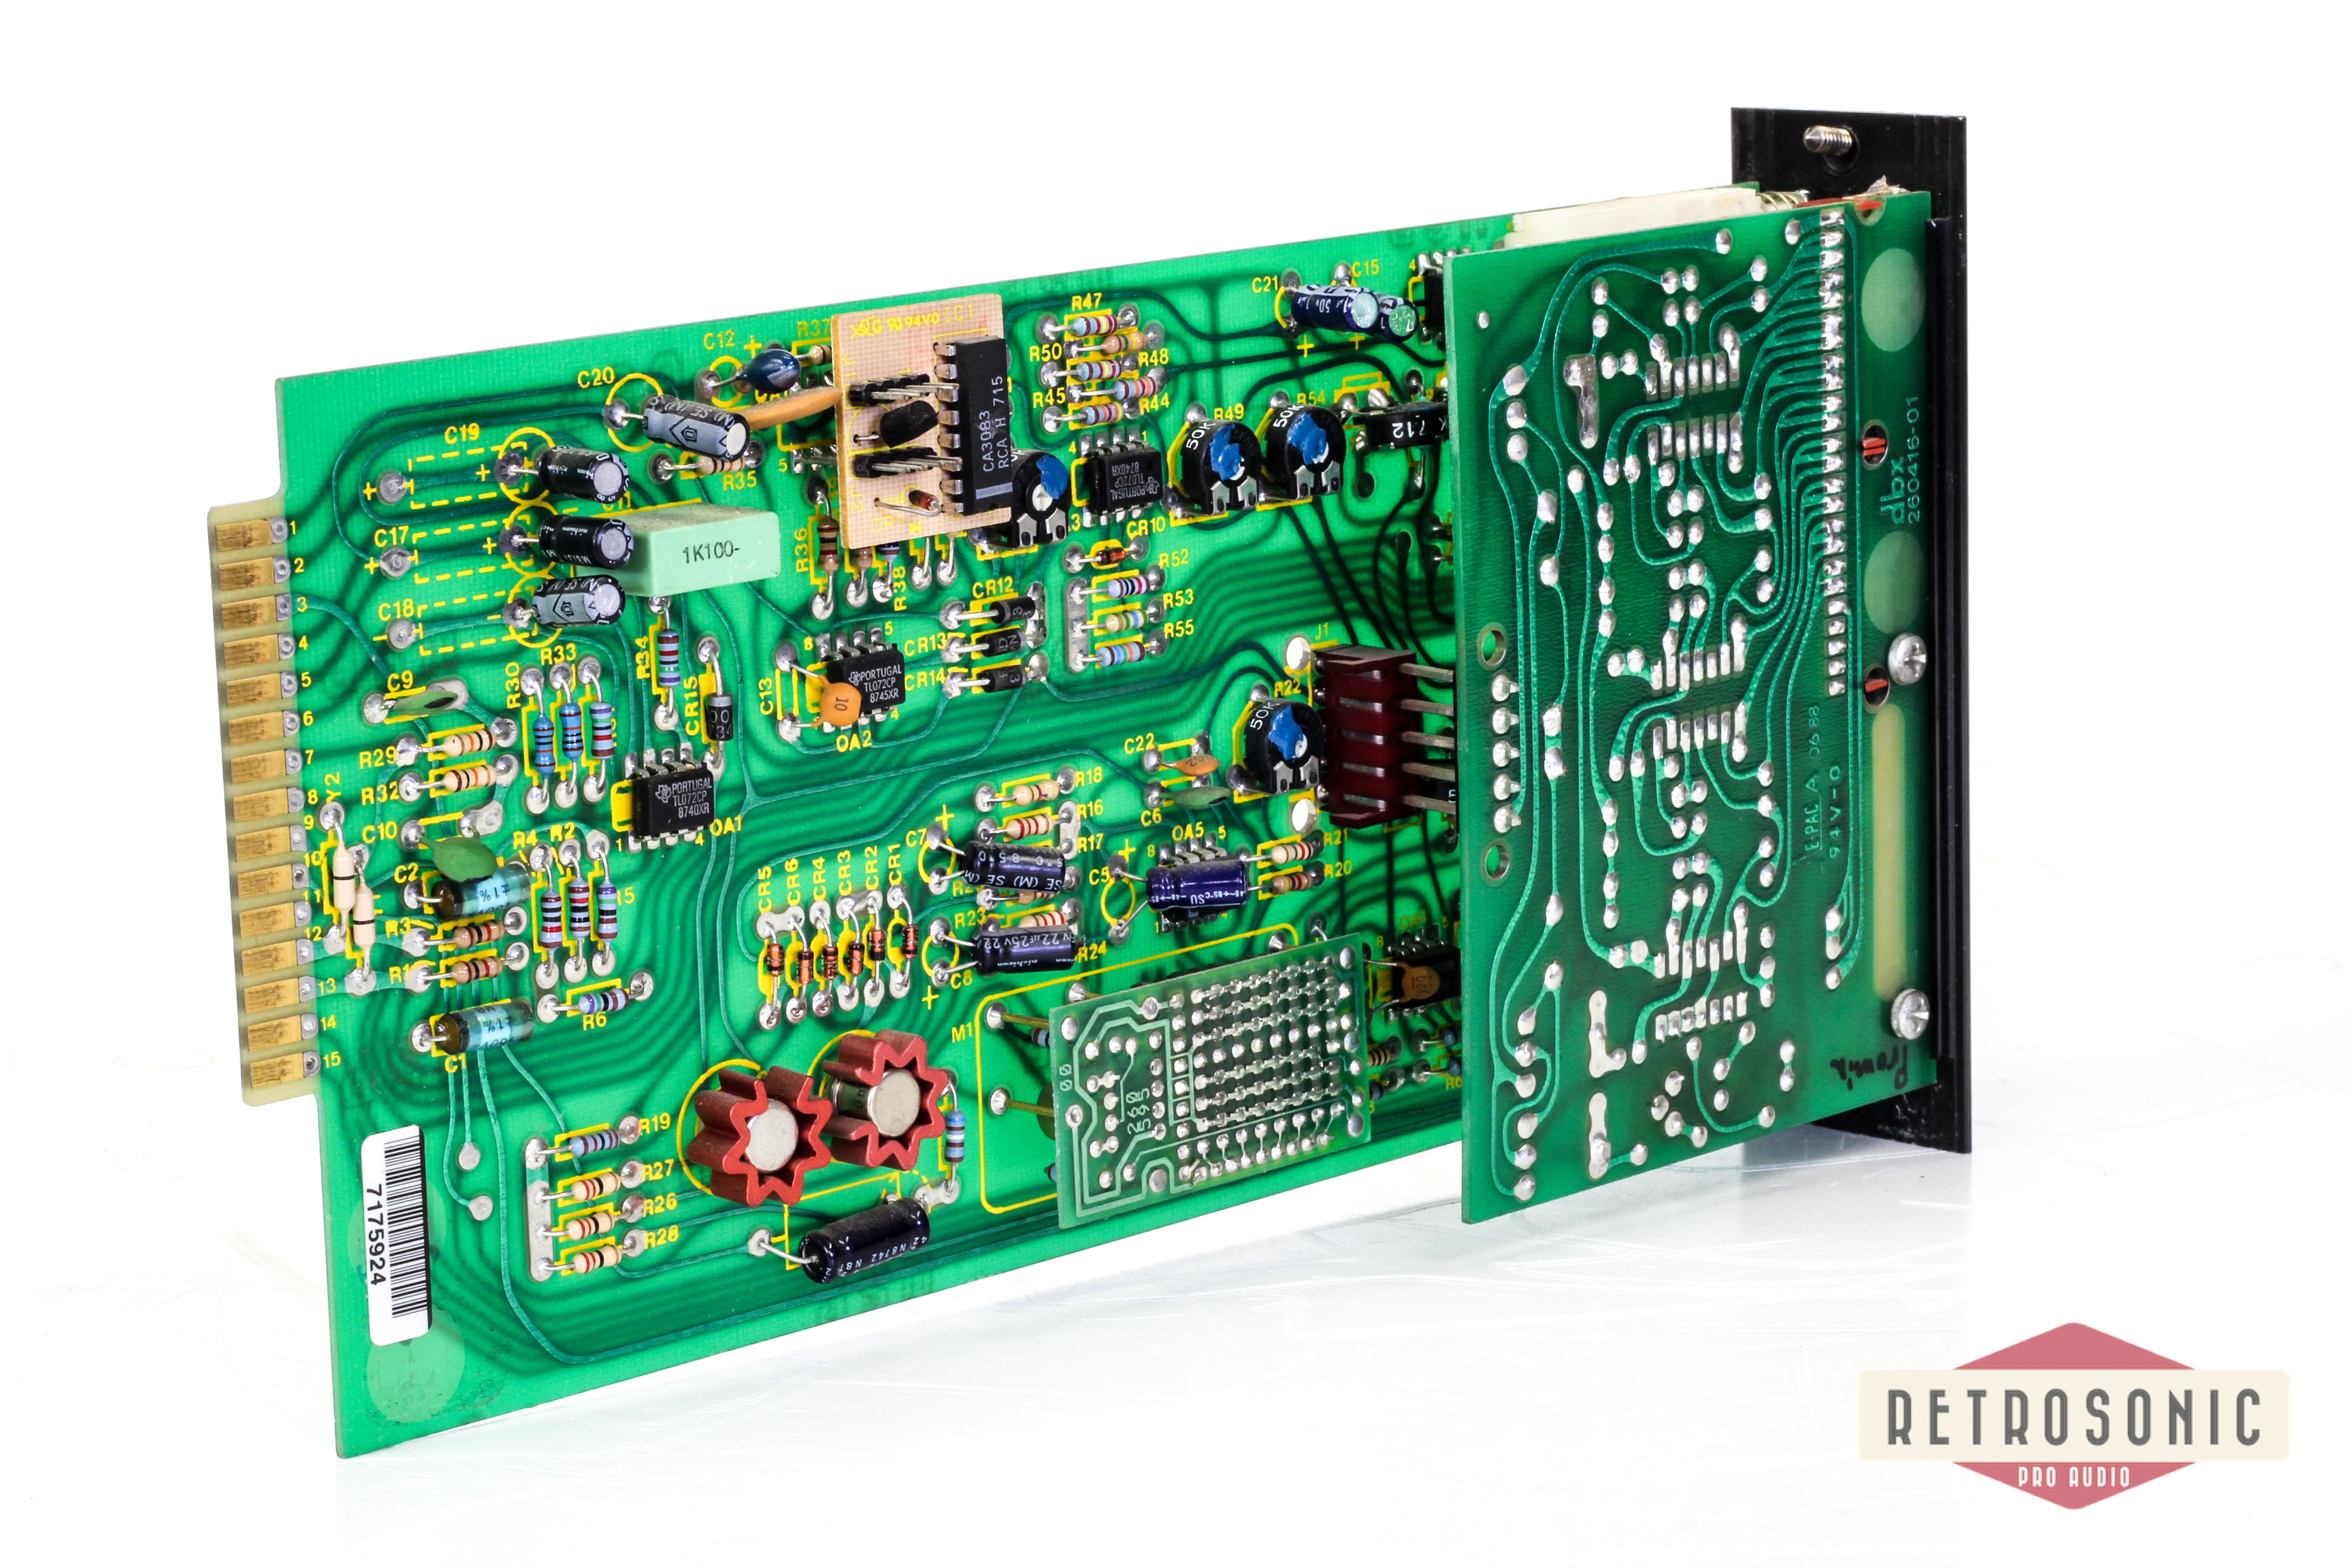 DBX 903 Compressor Limiter module for 900-series rack